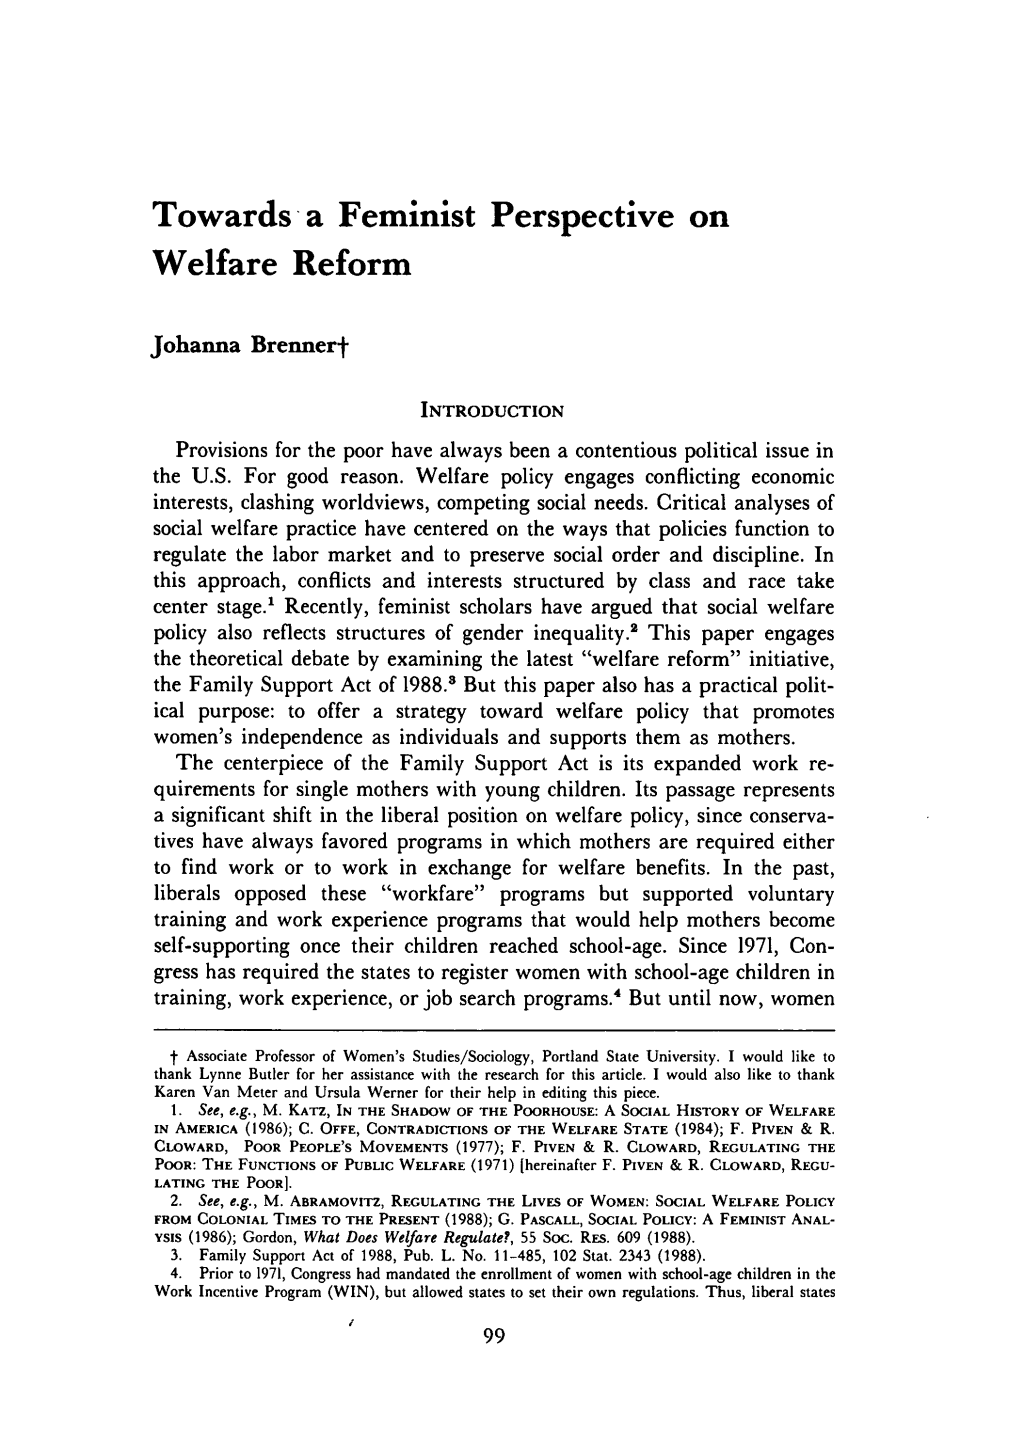 Towards a Feminist Perspective on Welfare Reform